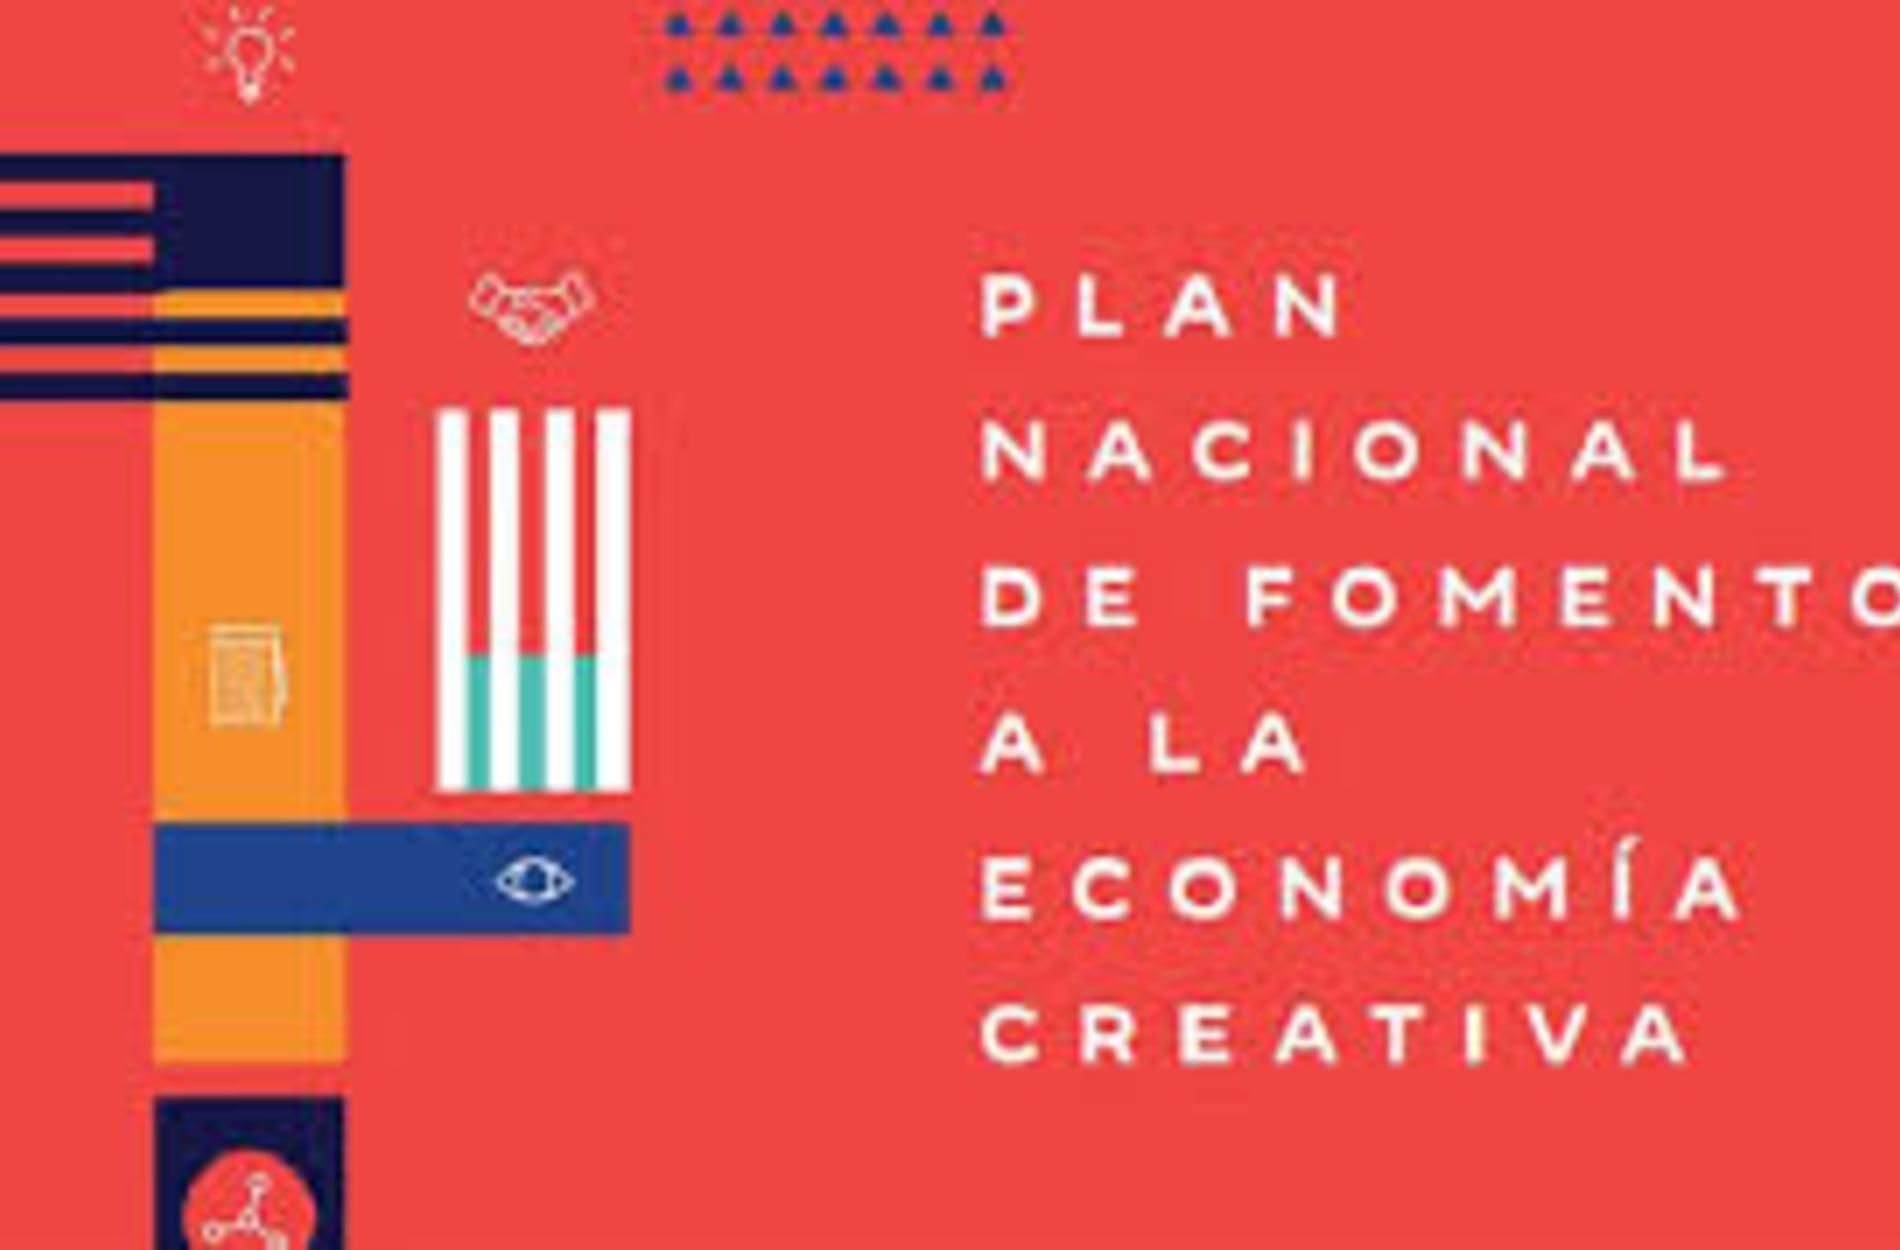 Plan Nacional de Fomento a la Economía Creativa